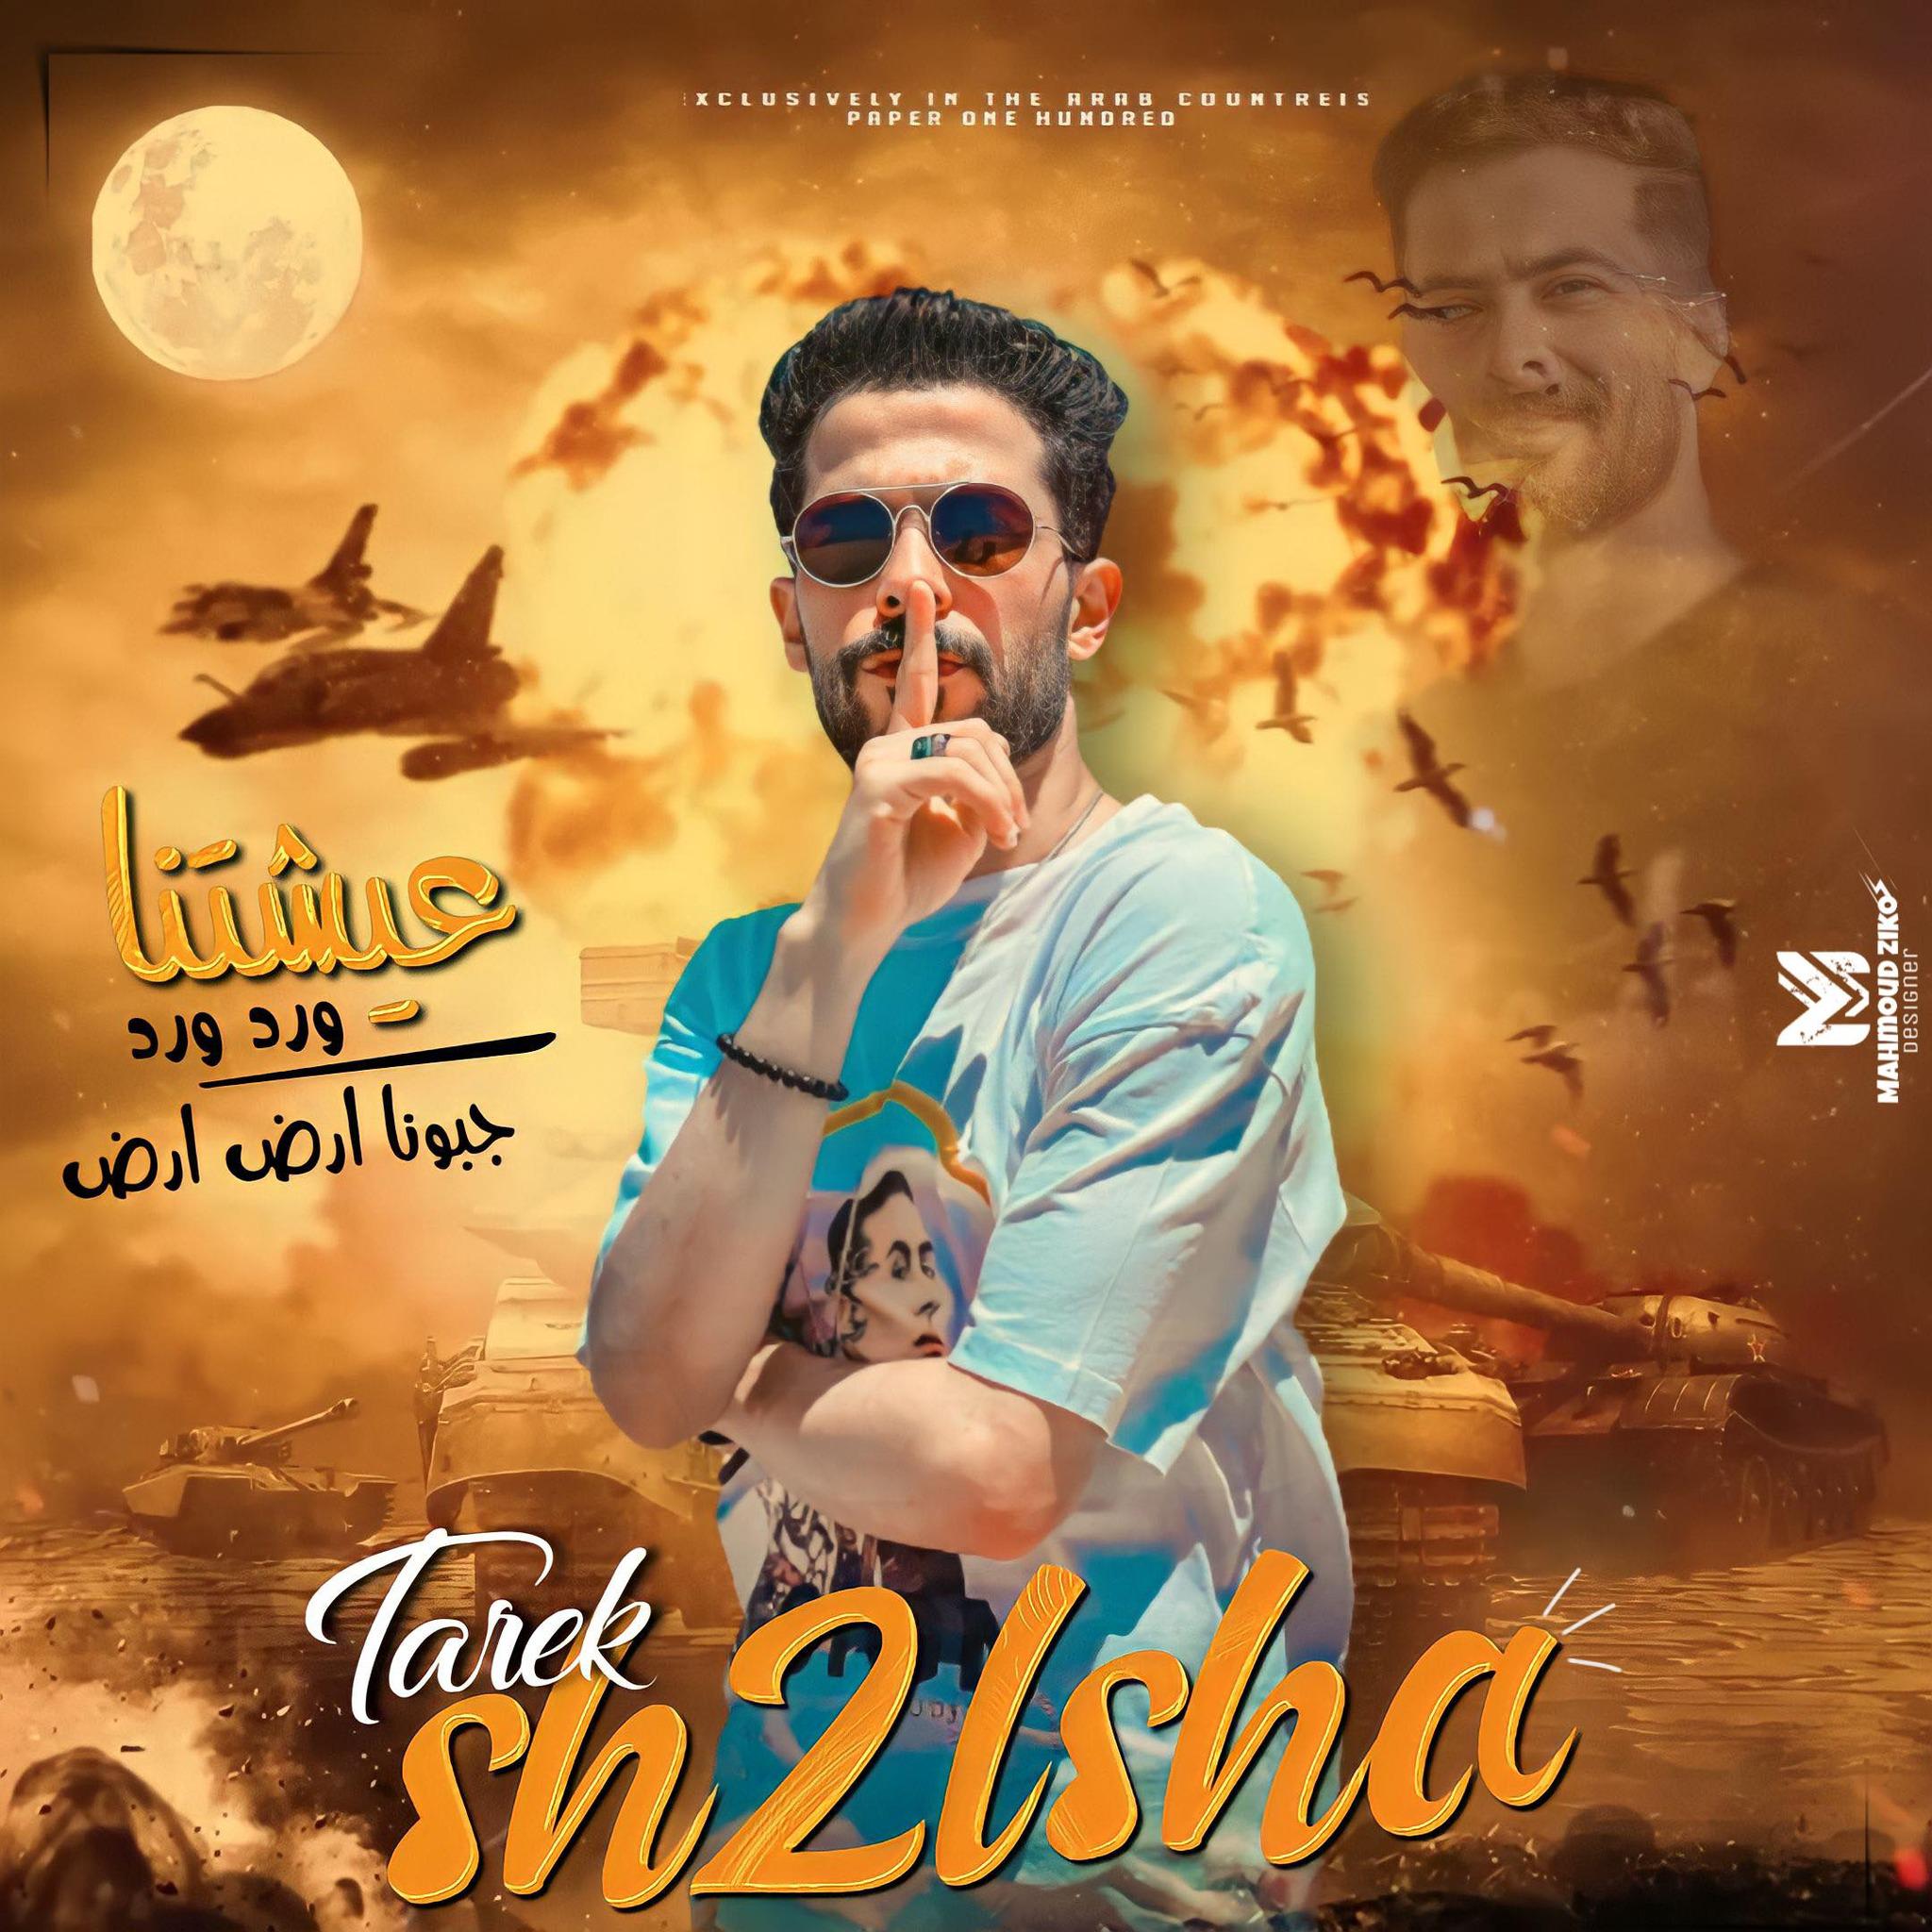 Tarek sh2lsha (طارق شئلشه)